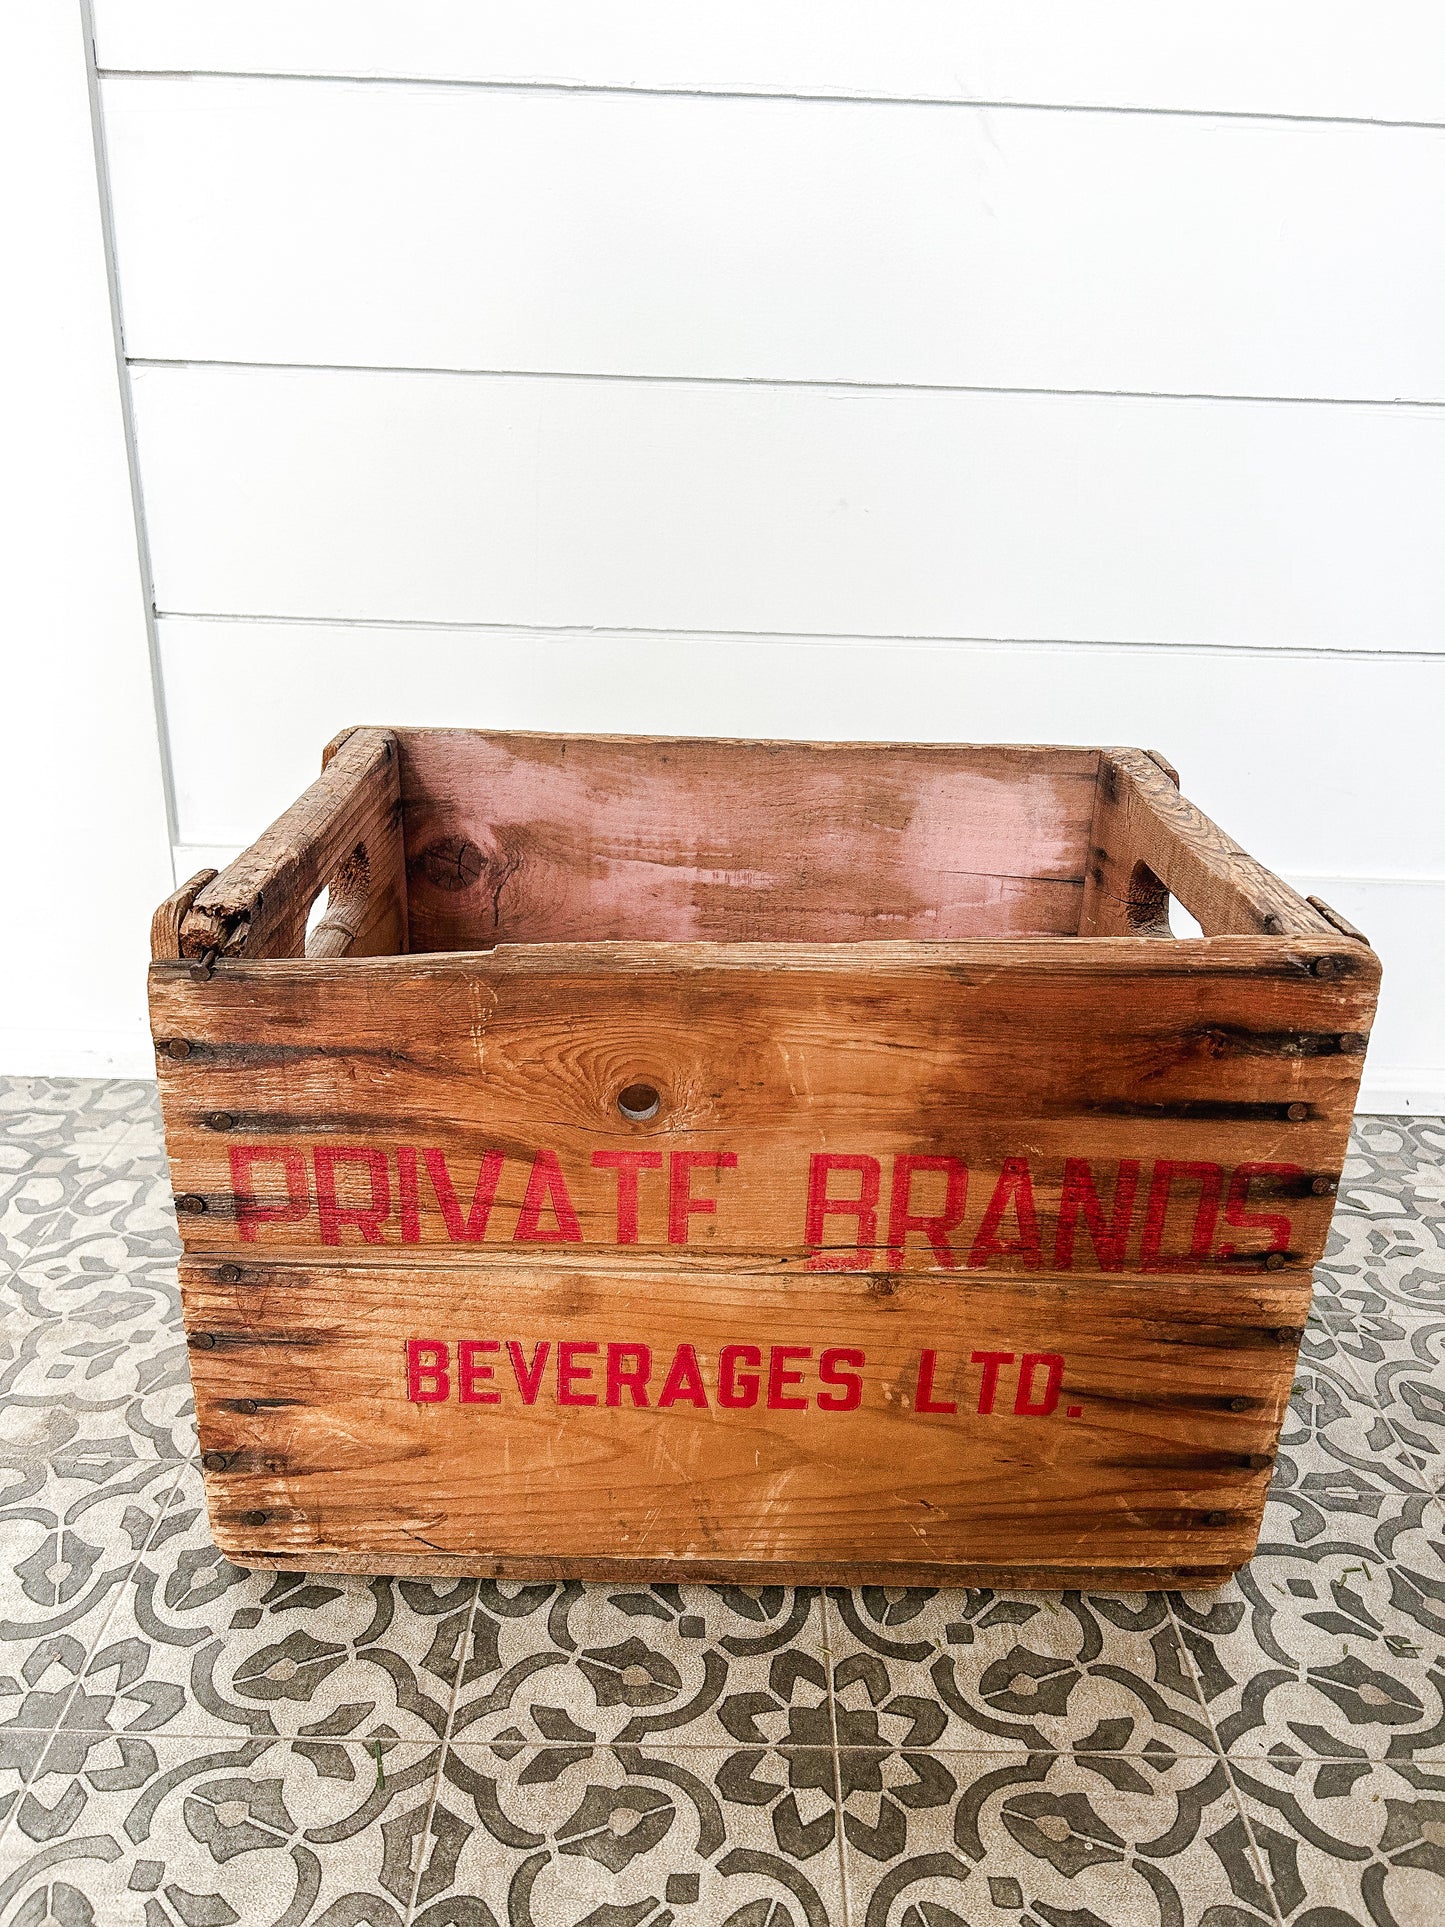 private brands beverages ltd. crate 2